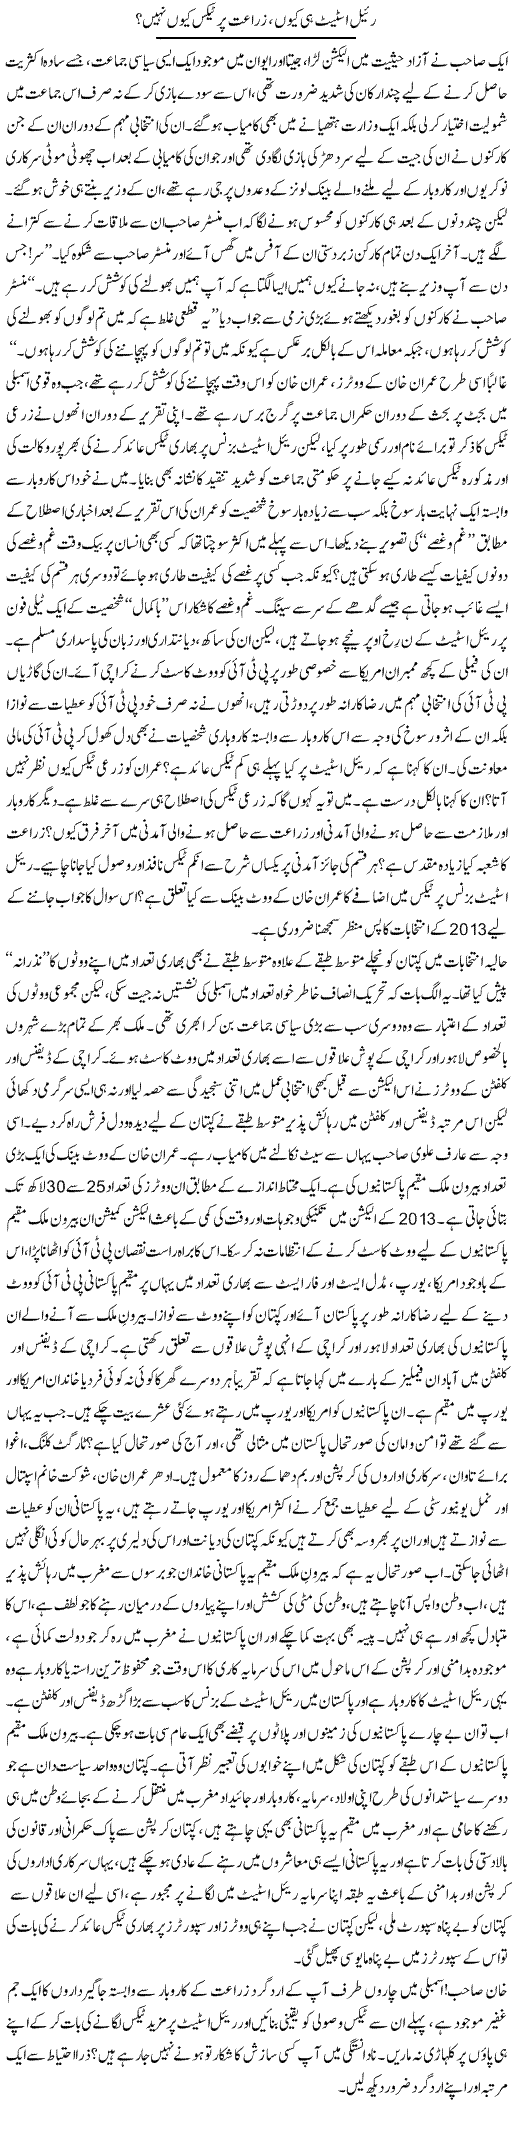 Real State Hi Kioon Zaraat Per Tax Q Nahi | S.Nayyar | Daily Urdu Columns